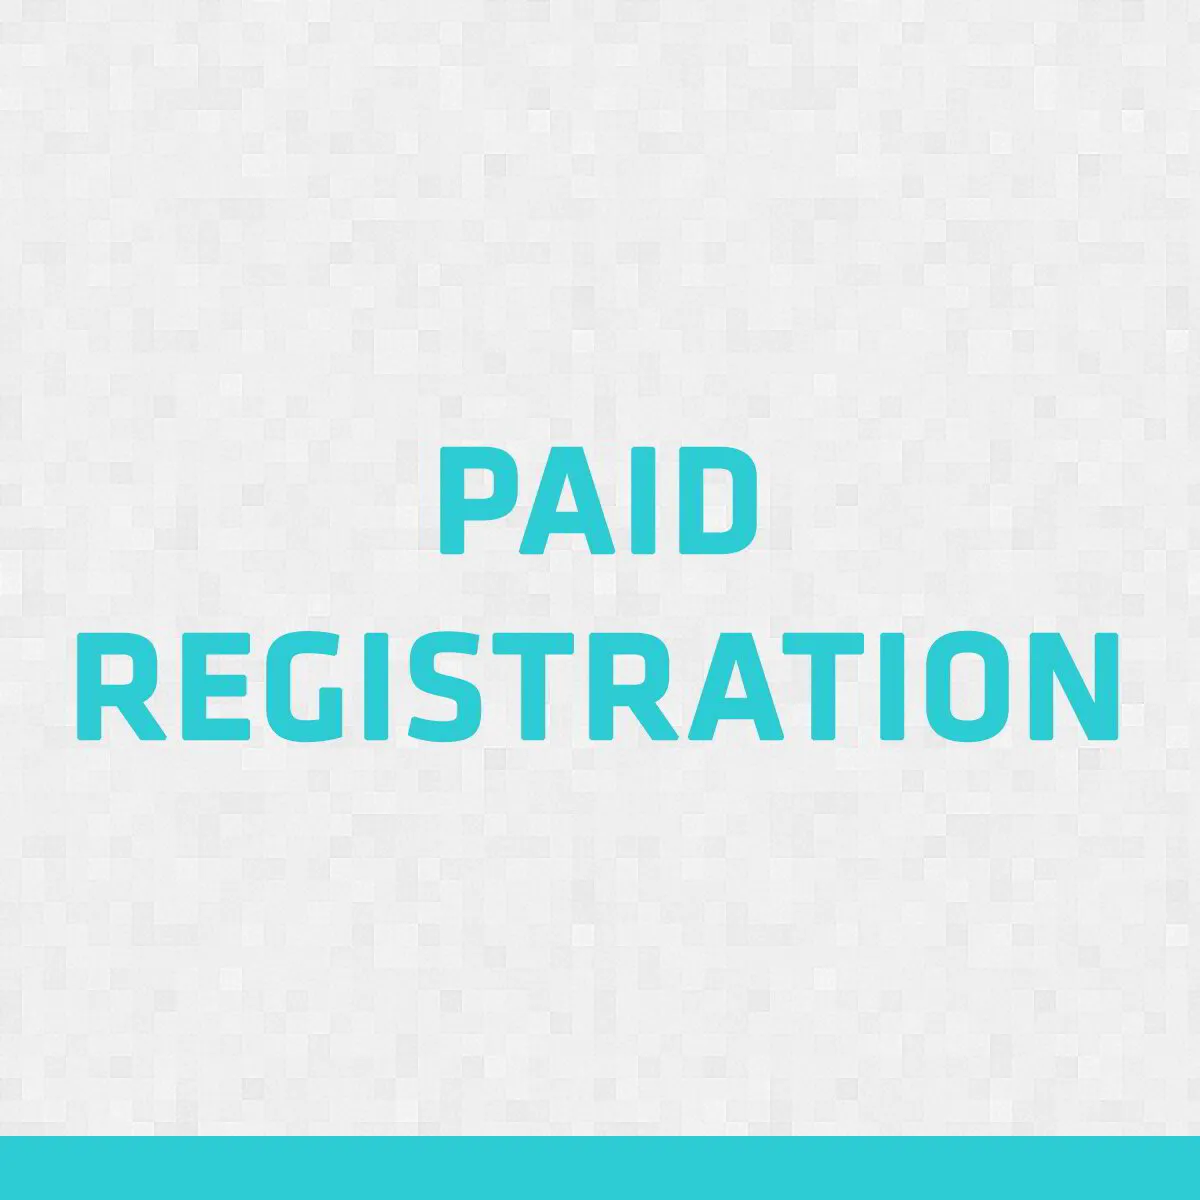 Paid Registration